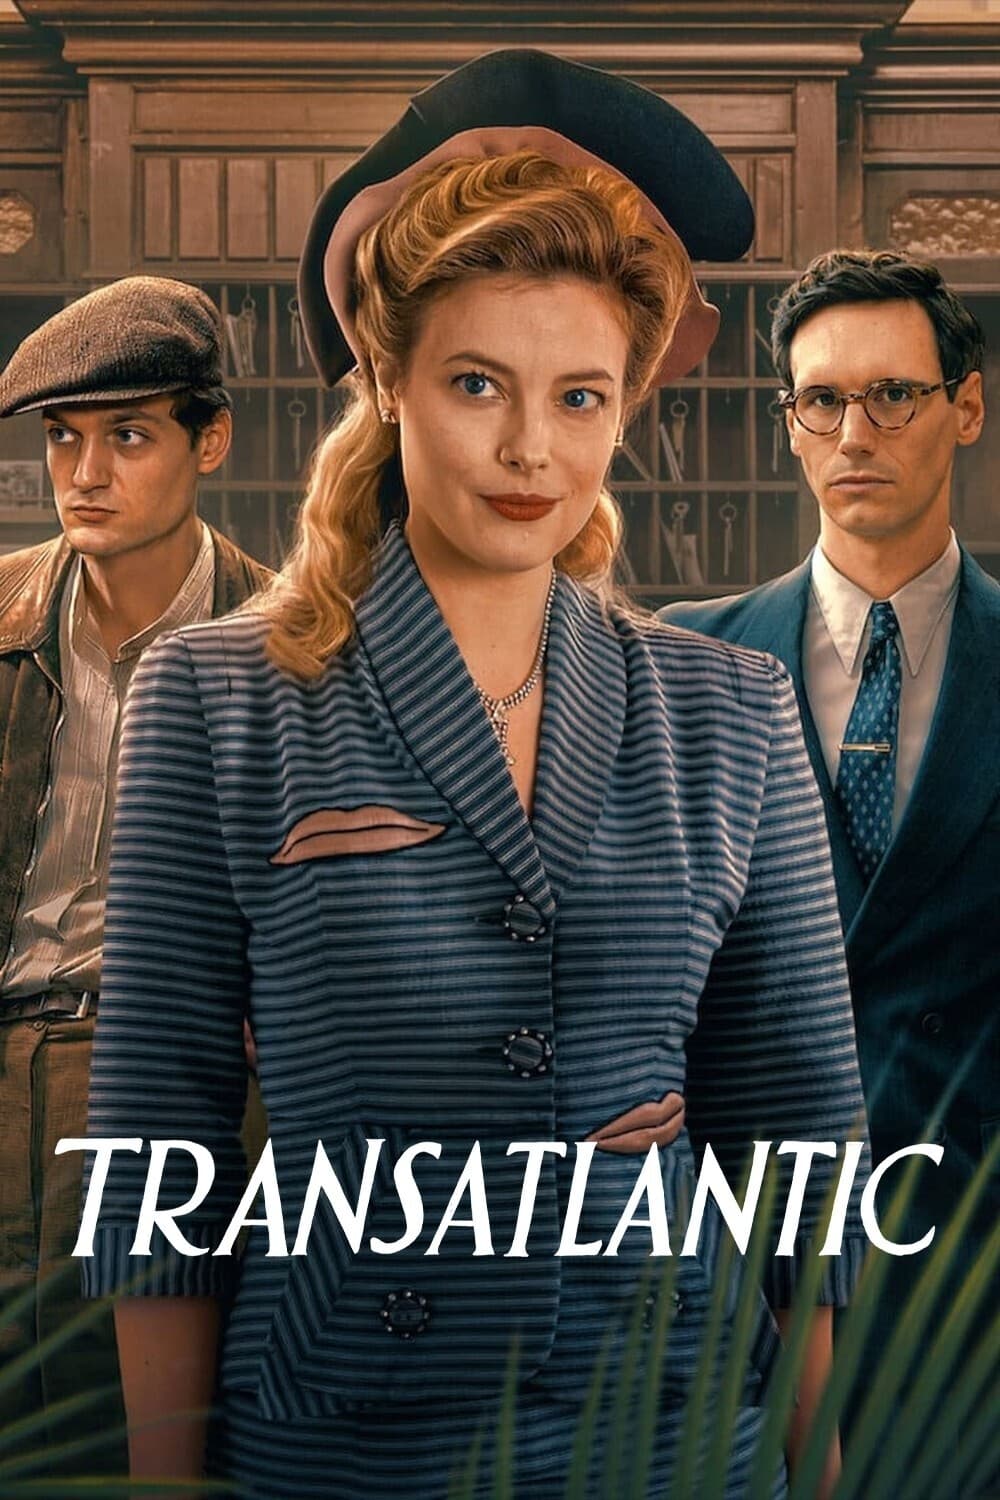 Plakát pro film “Transatlantic”